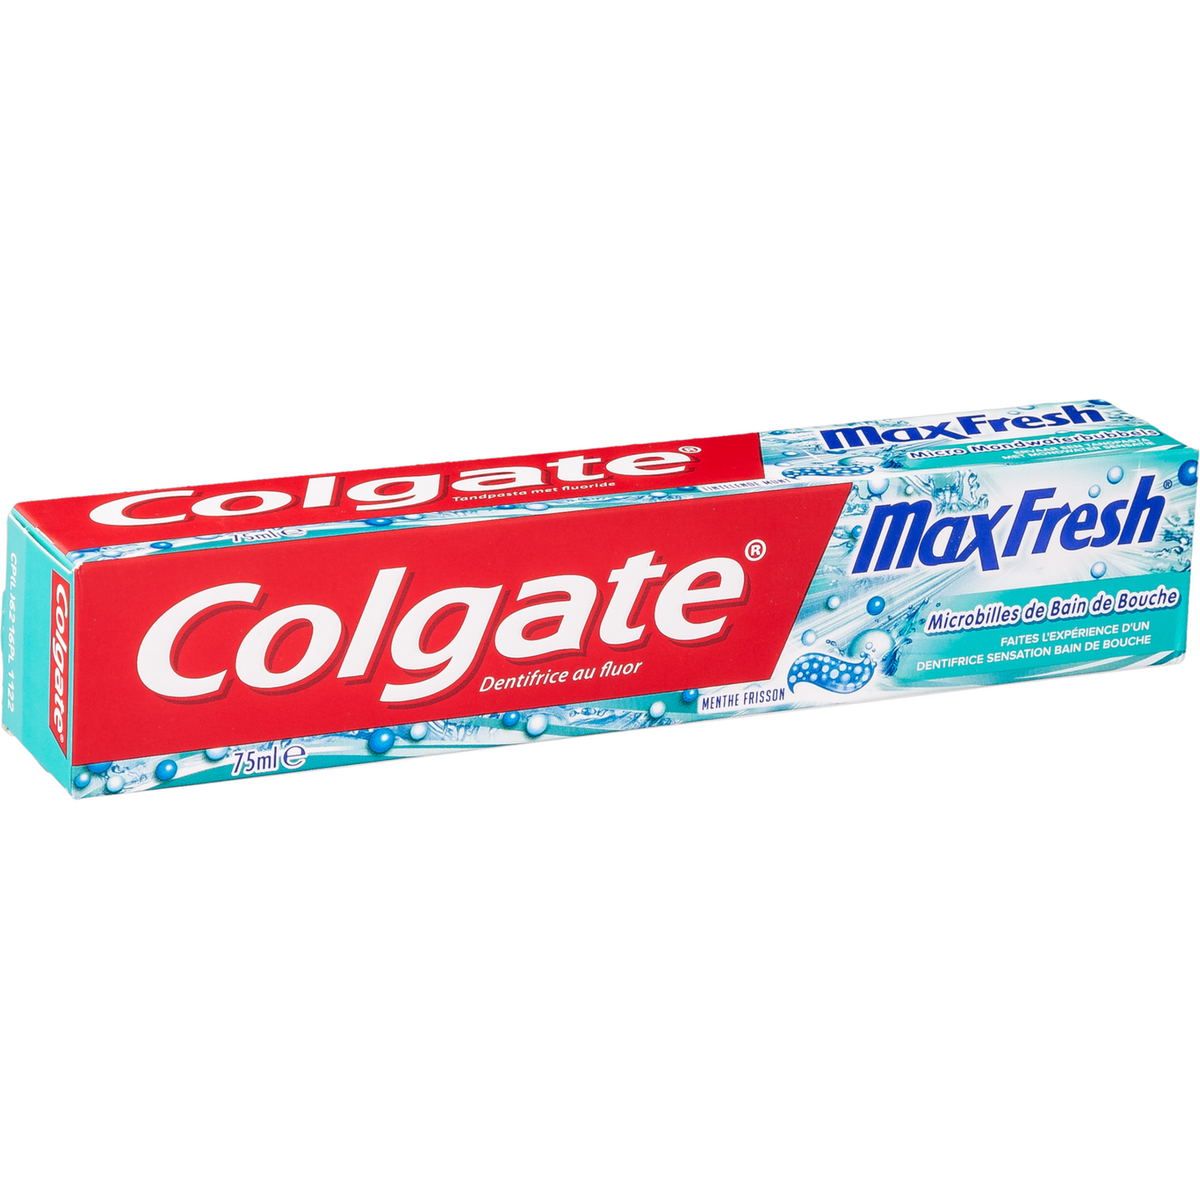 COLGATE Colgate dentifrice maxfresh microbille bleu 2x75ml